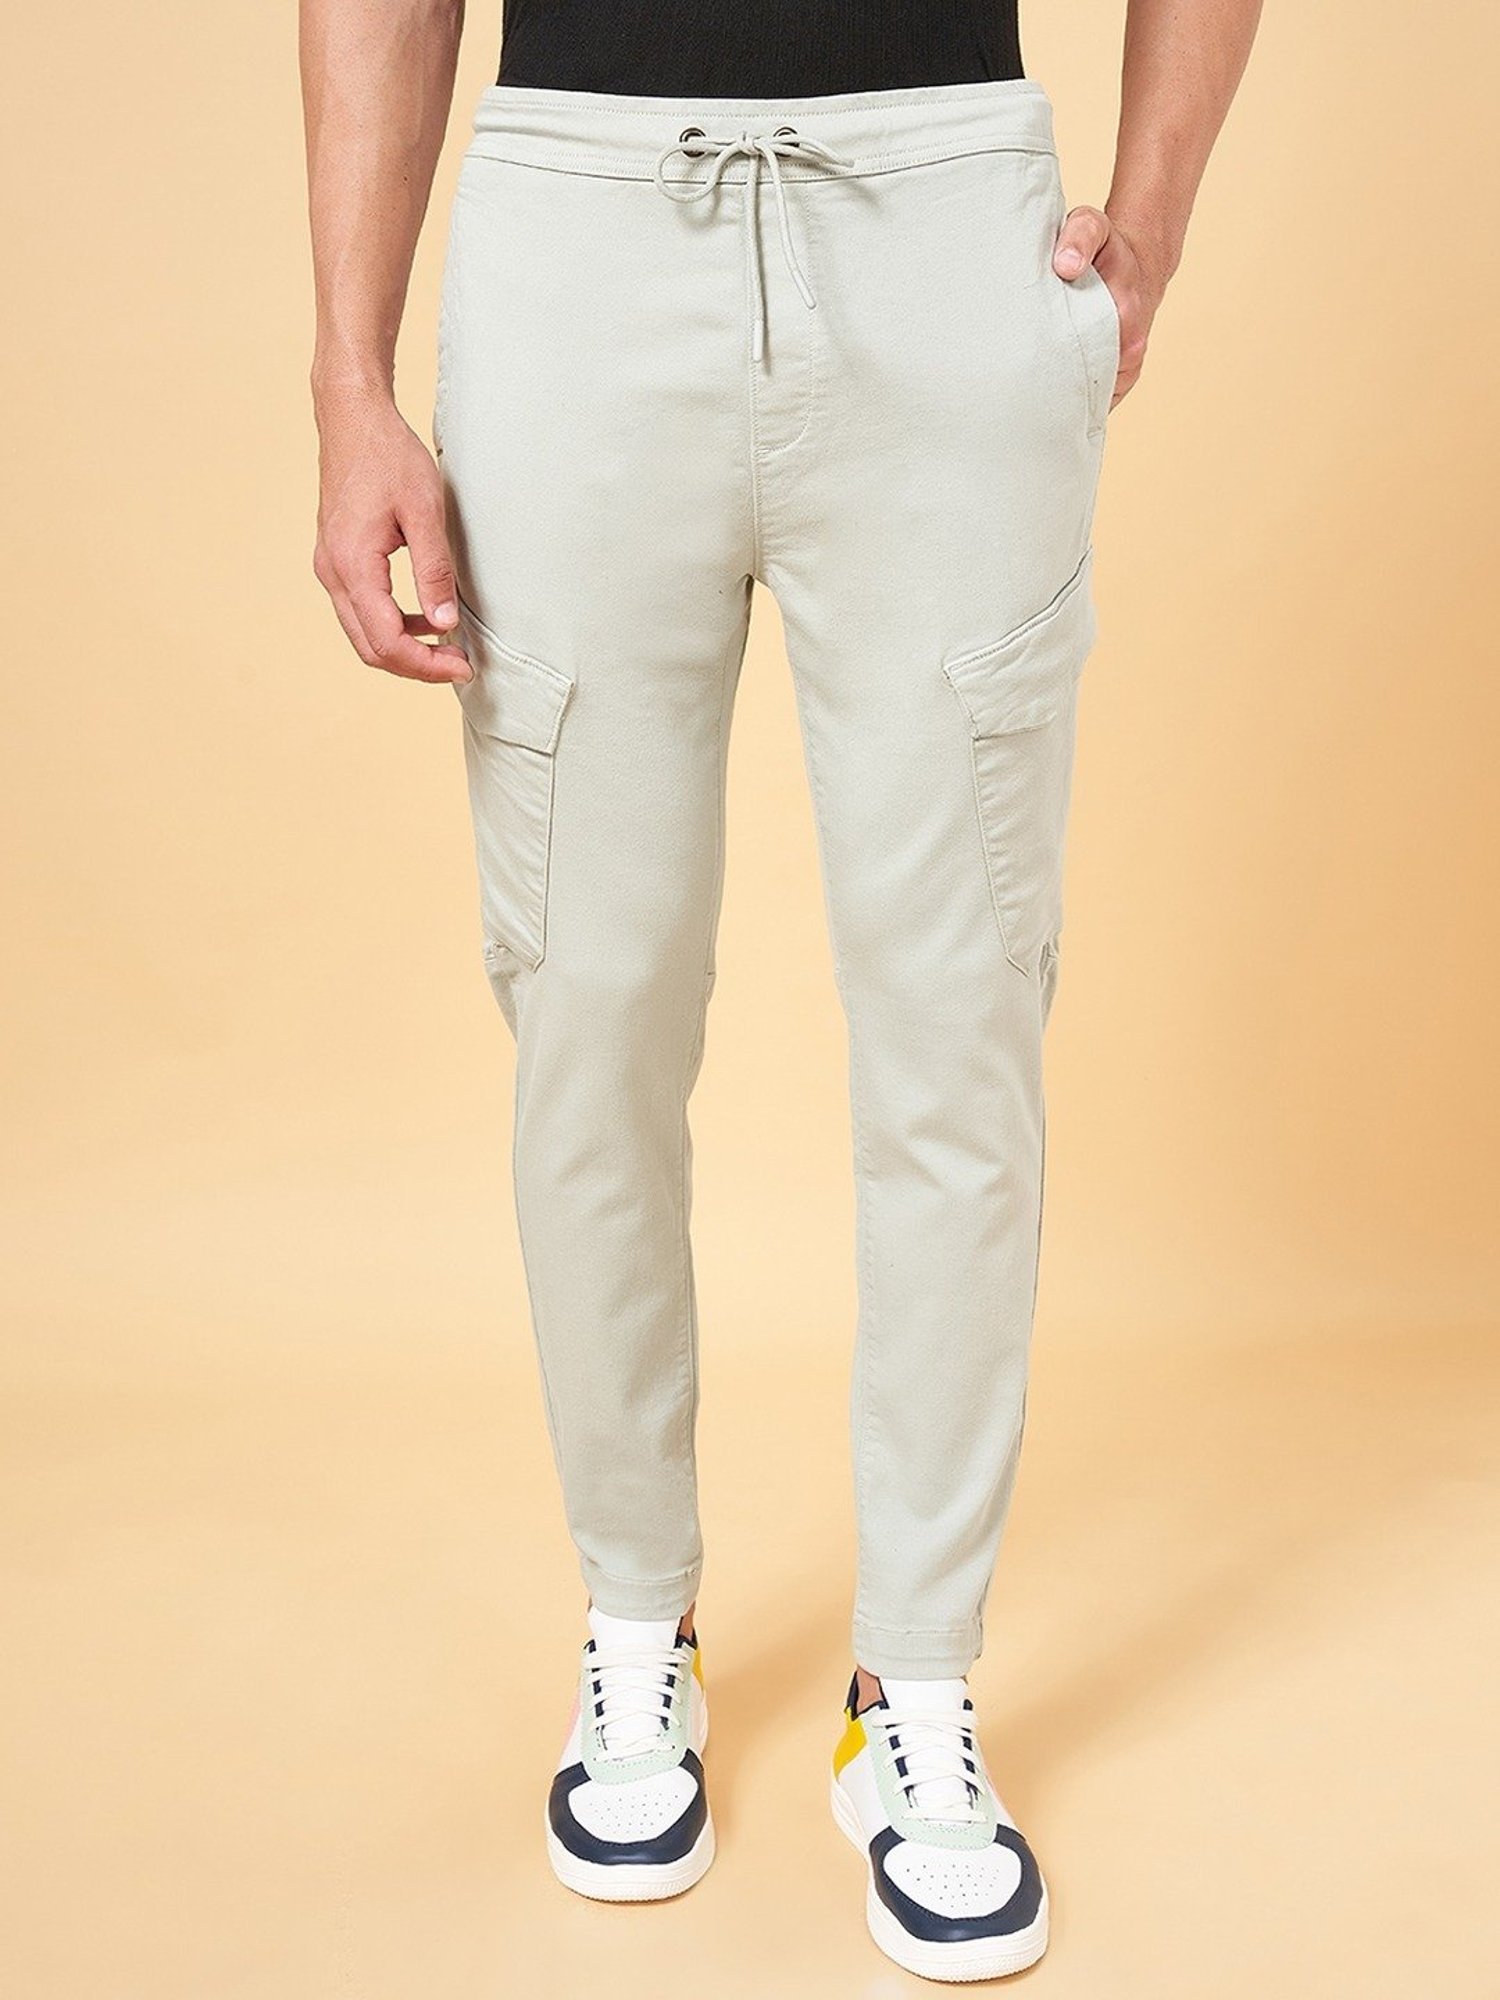 Buy KHAKI Trousers & Pants for Men by URBAN RANGER by Pantaloons Online |  Ajio.com